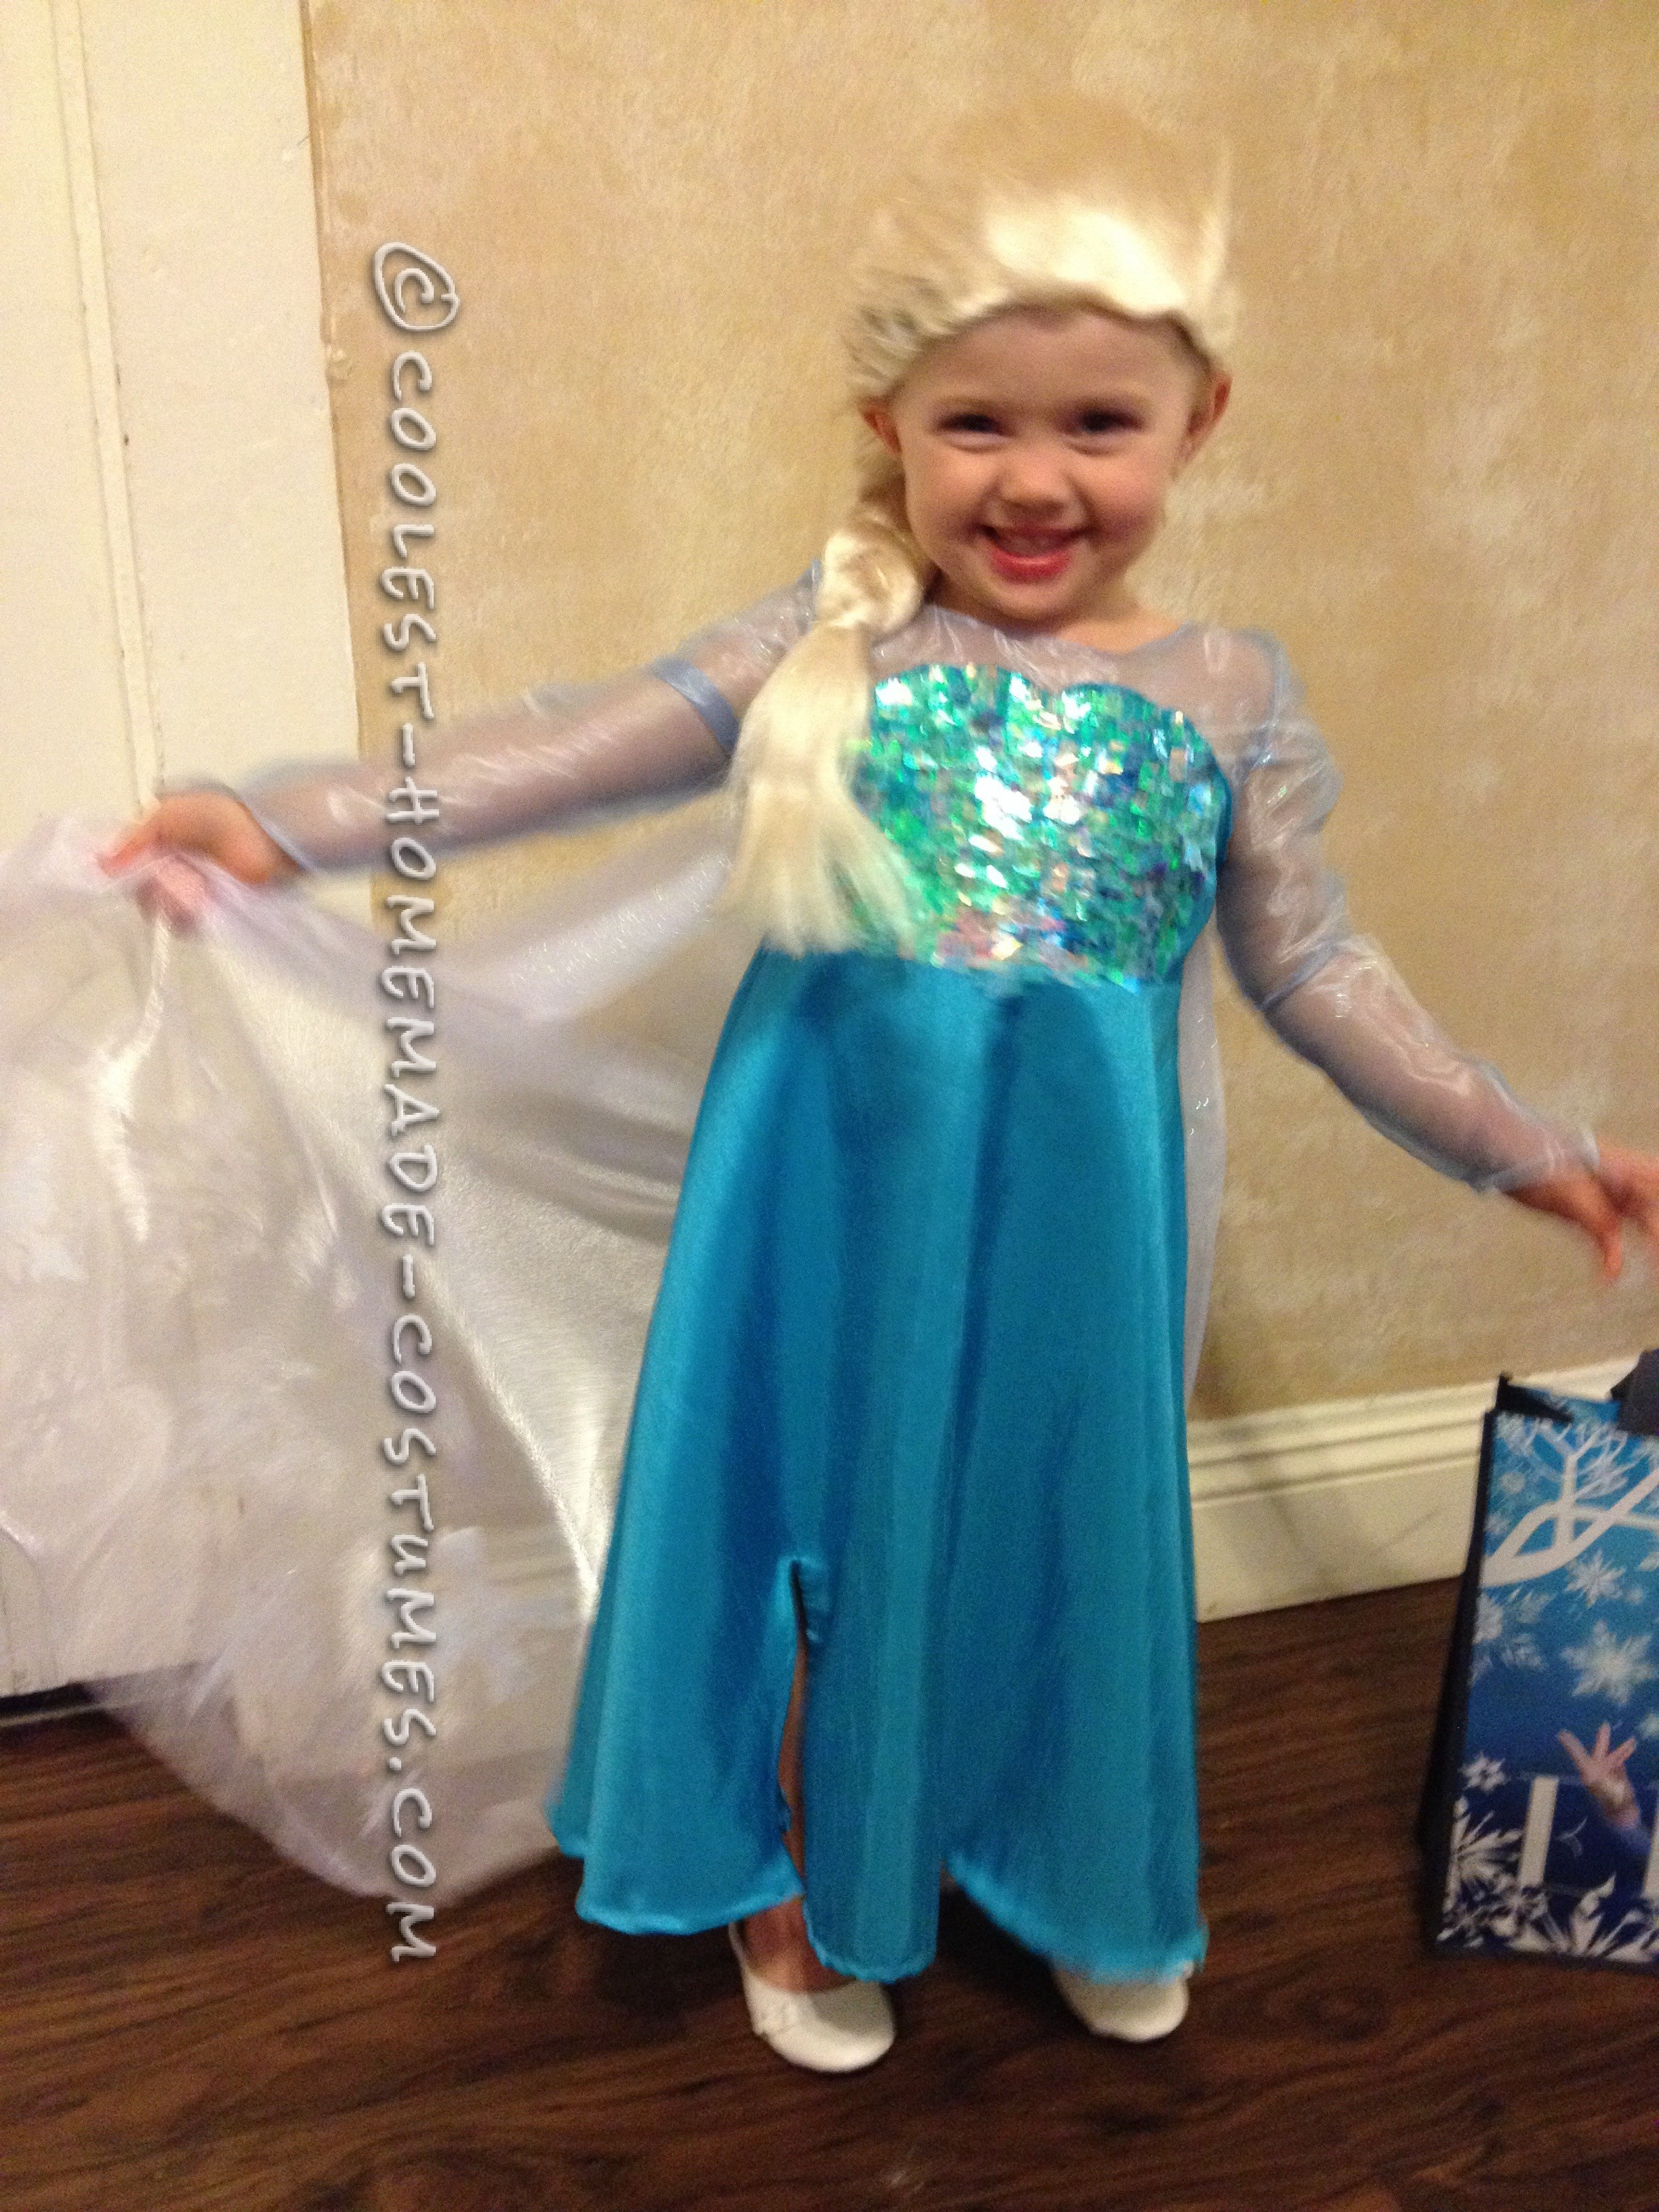 Cool Homemade Queen Elsa Costume